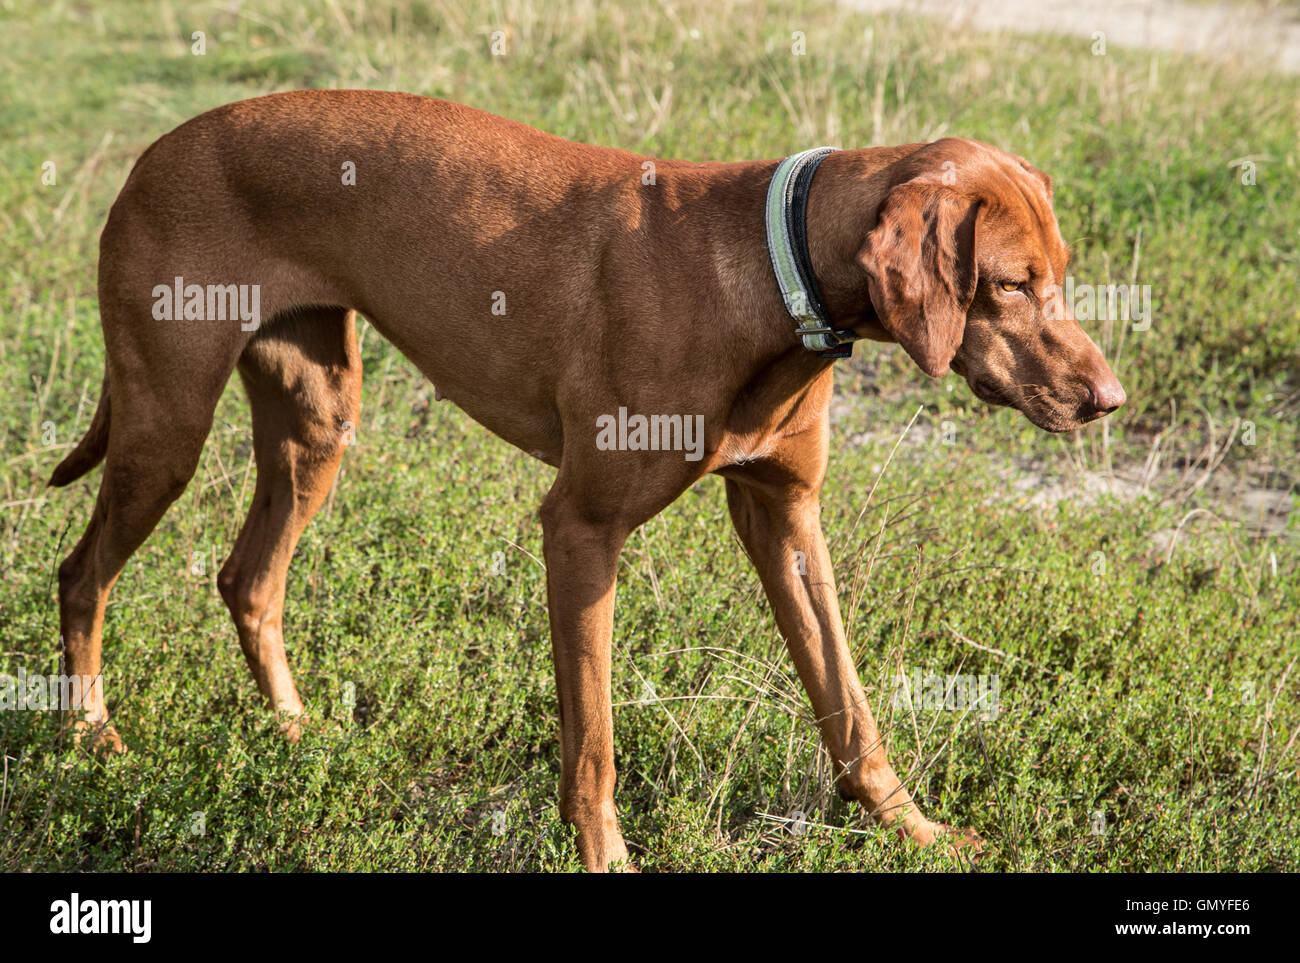 Un perro weimaraner marrón en su caminar. - Ein brauner weimaraner  Fotografía de stock - Alamy